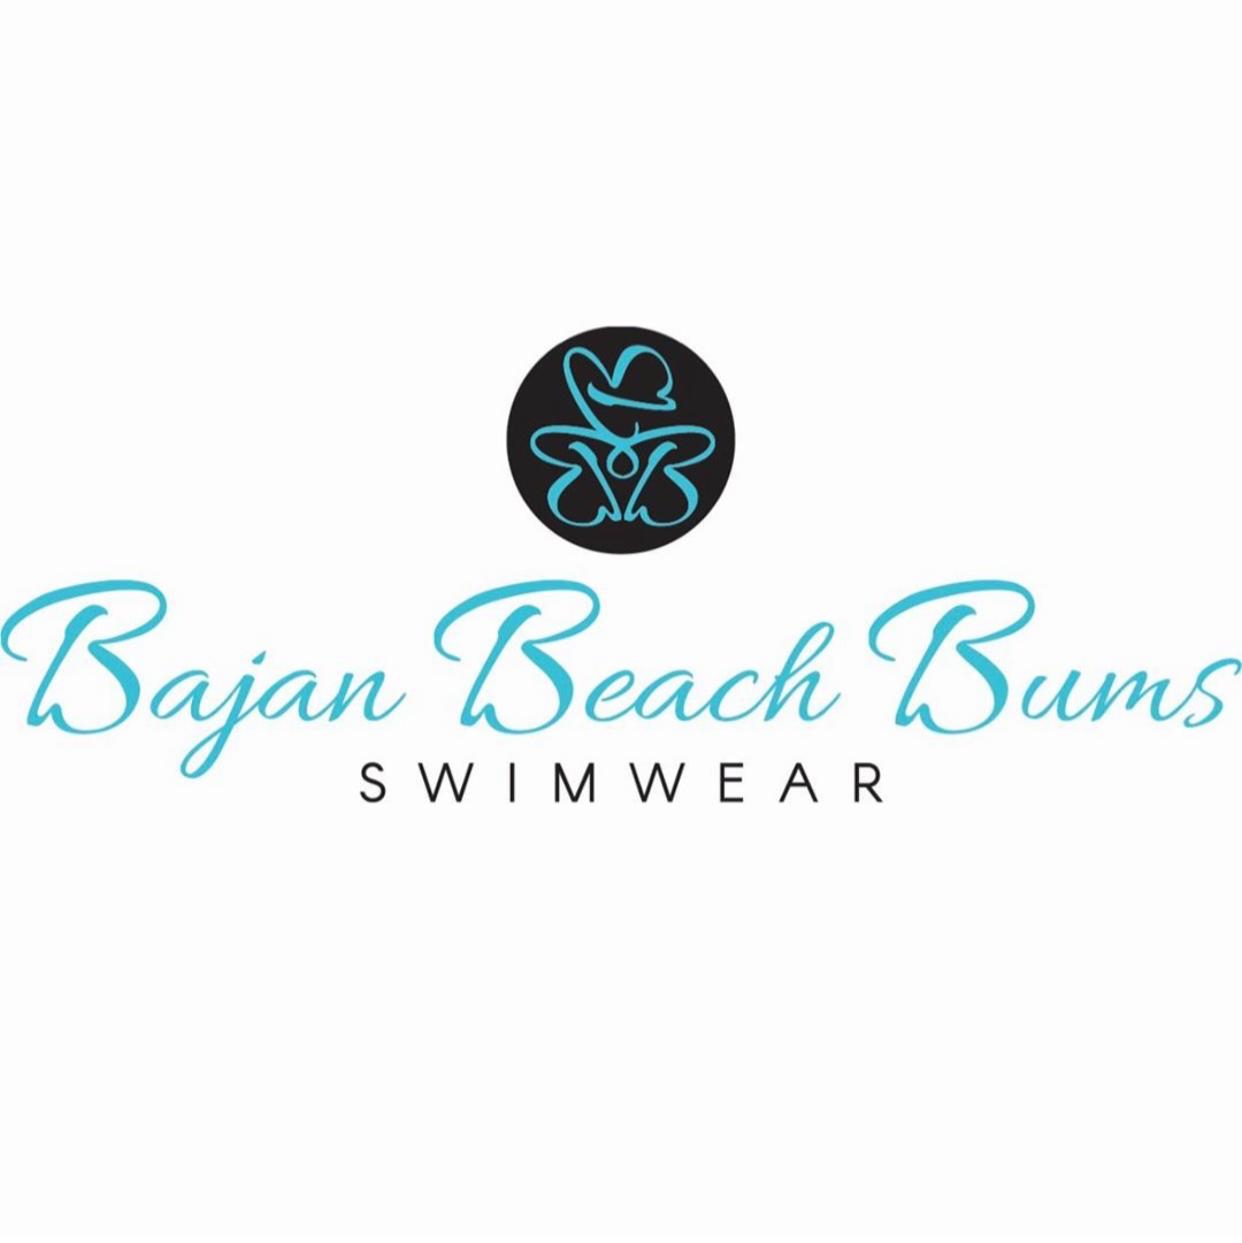 Bajan Beach Bums-logo.jpg